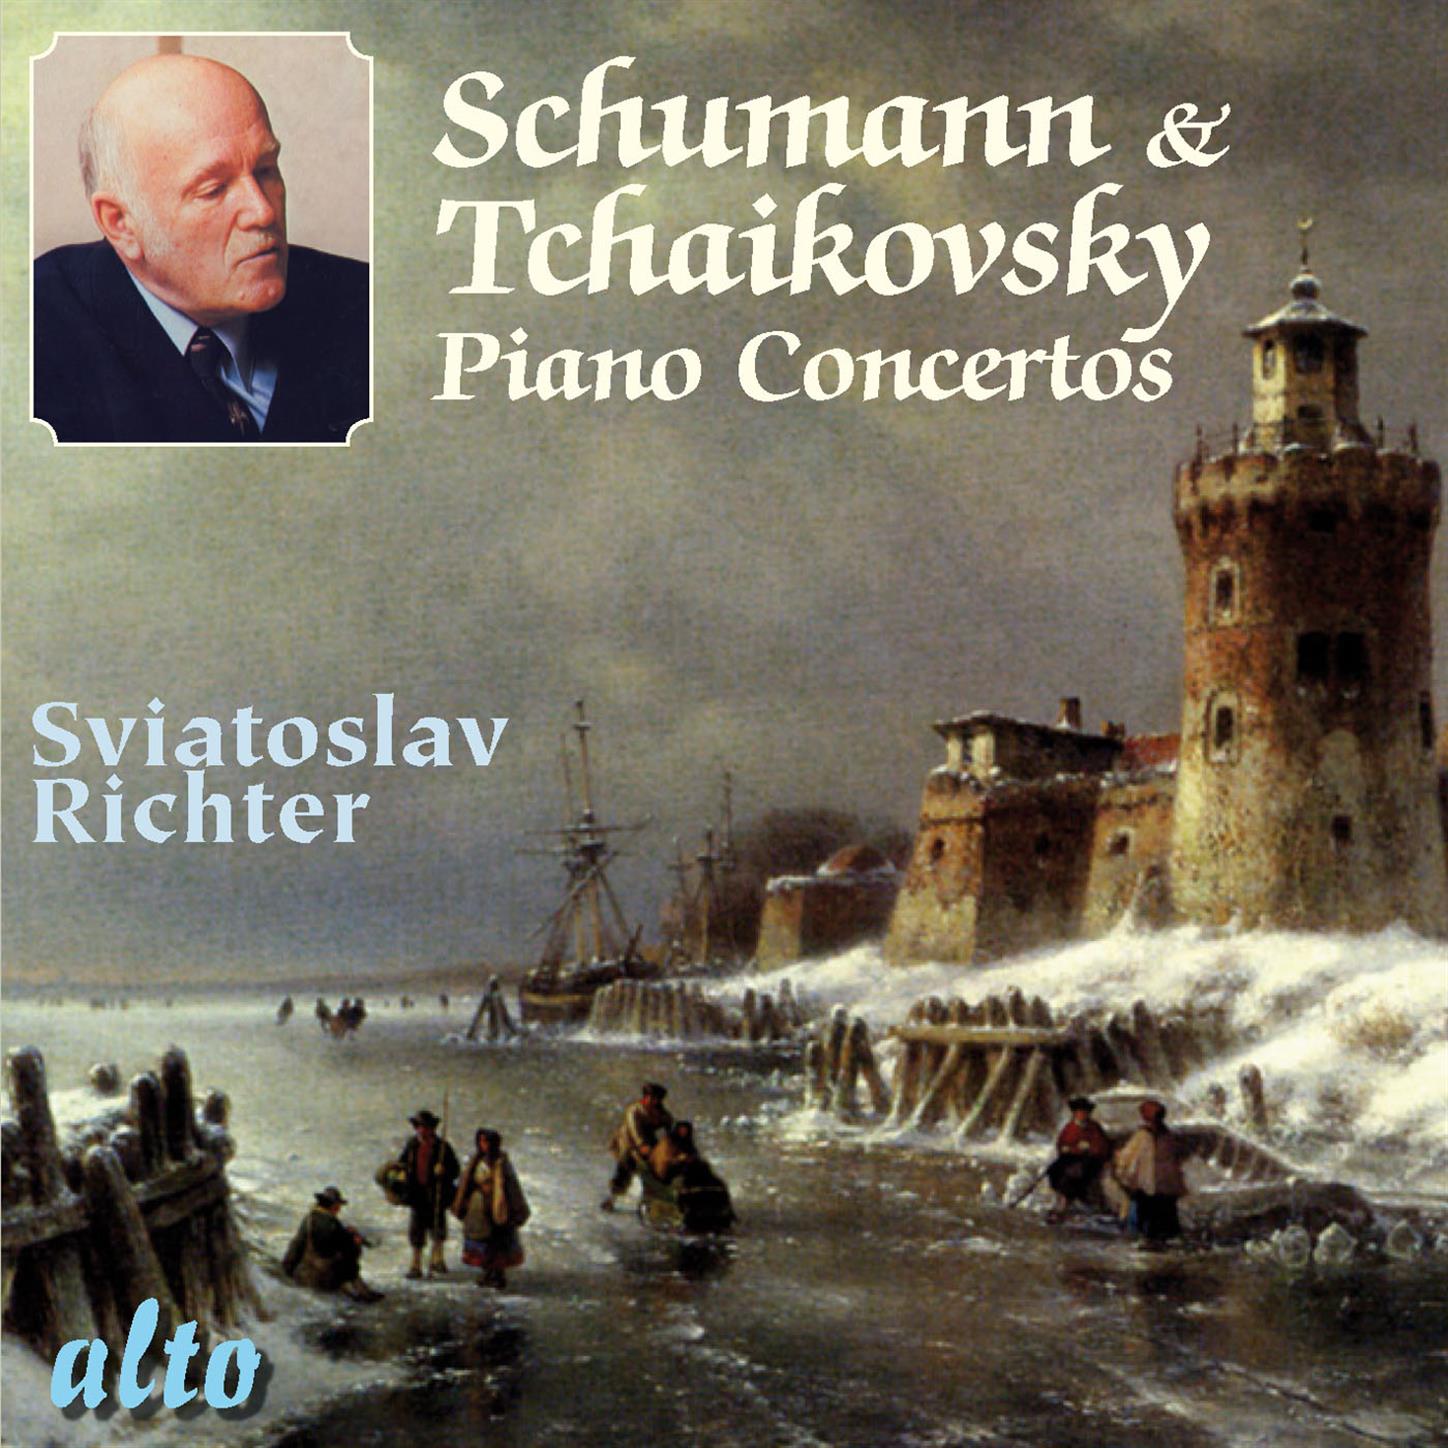 Schumann & Tchaikovsky Piano Concertos